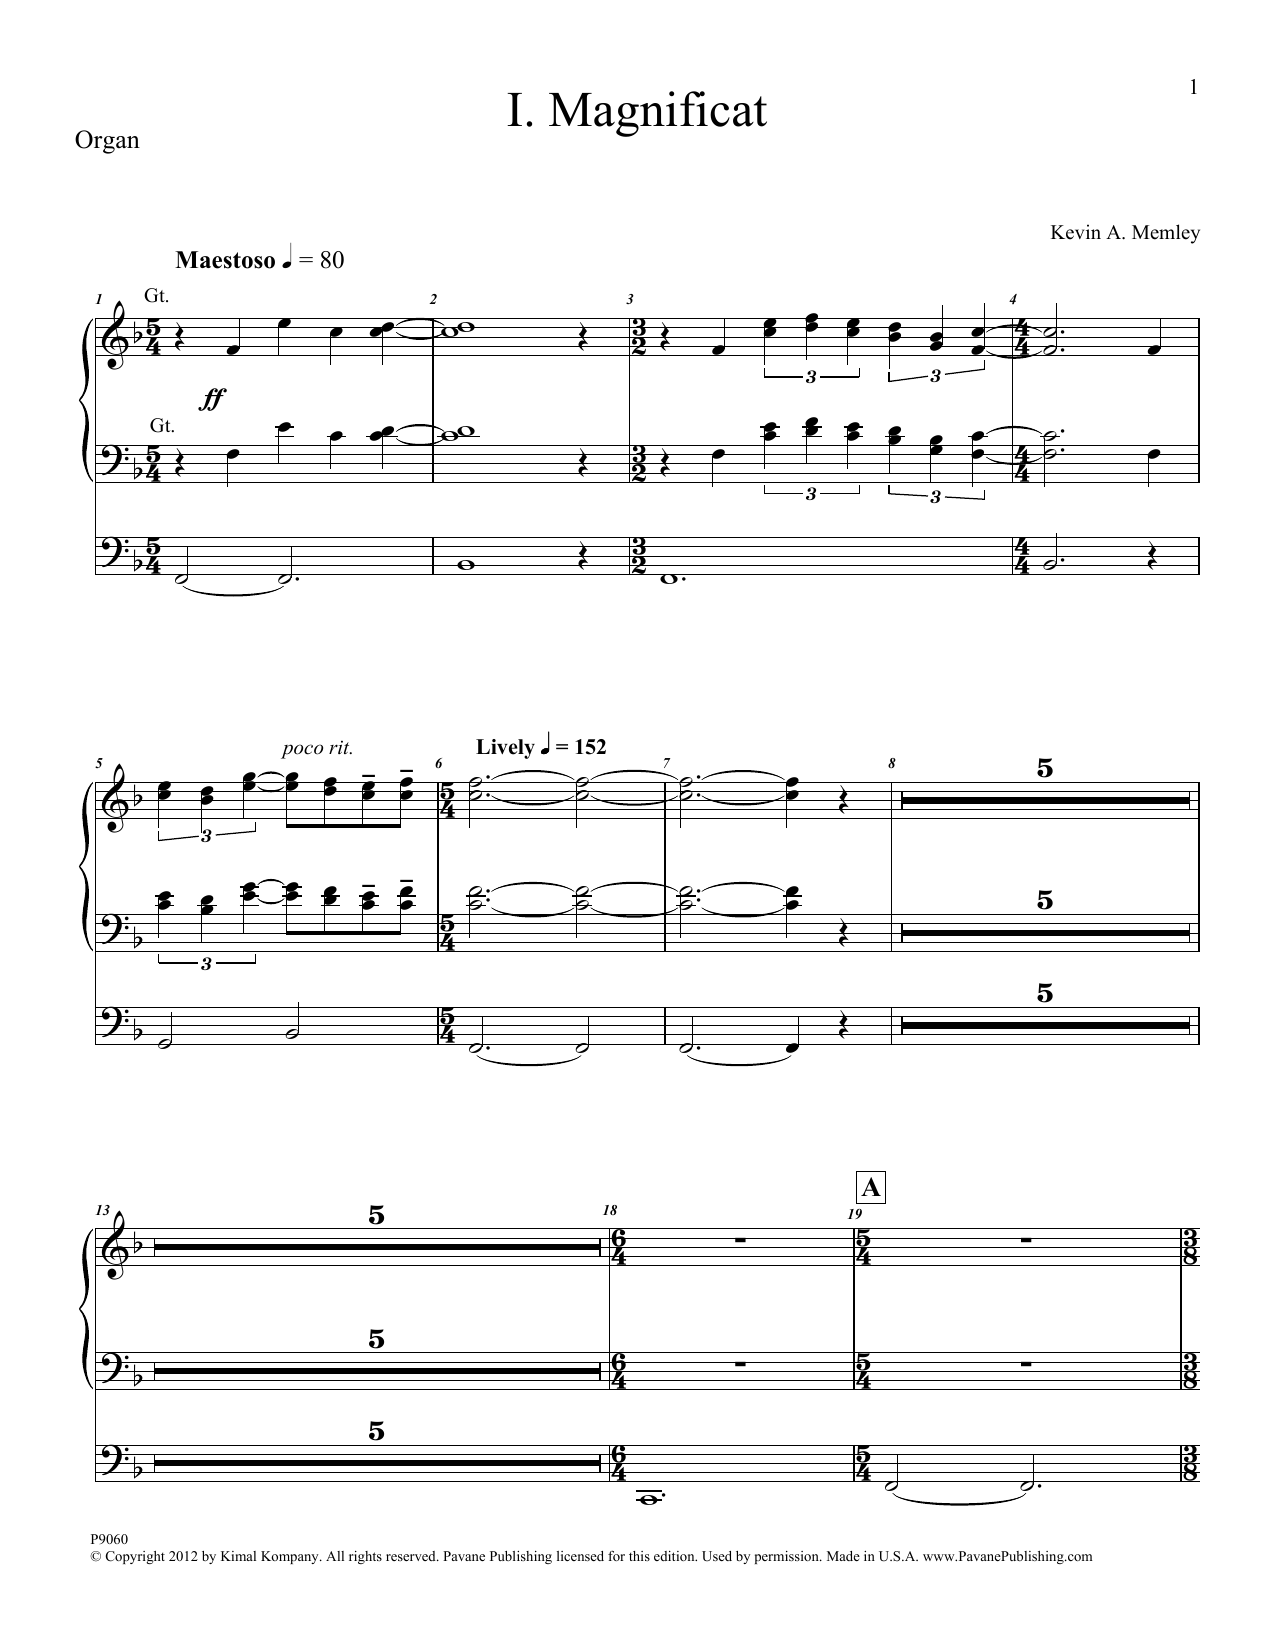 Download Kevin Memley Magnificat (Brass Quintet) (Parts) - Or Sheet Music